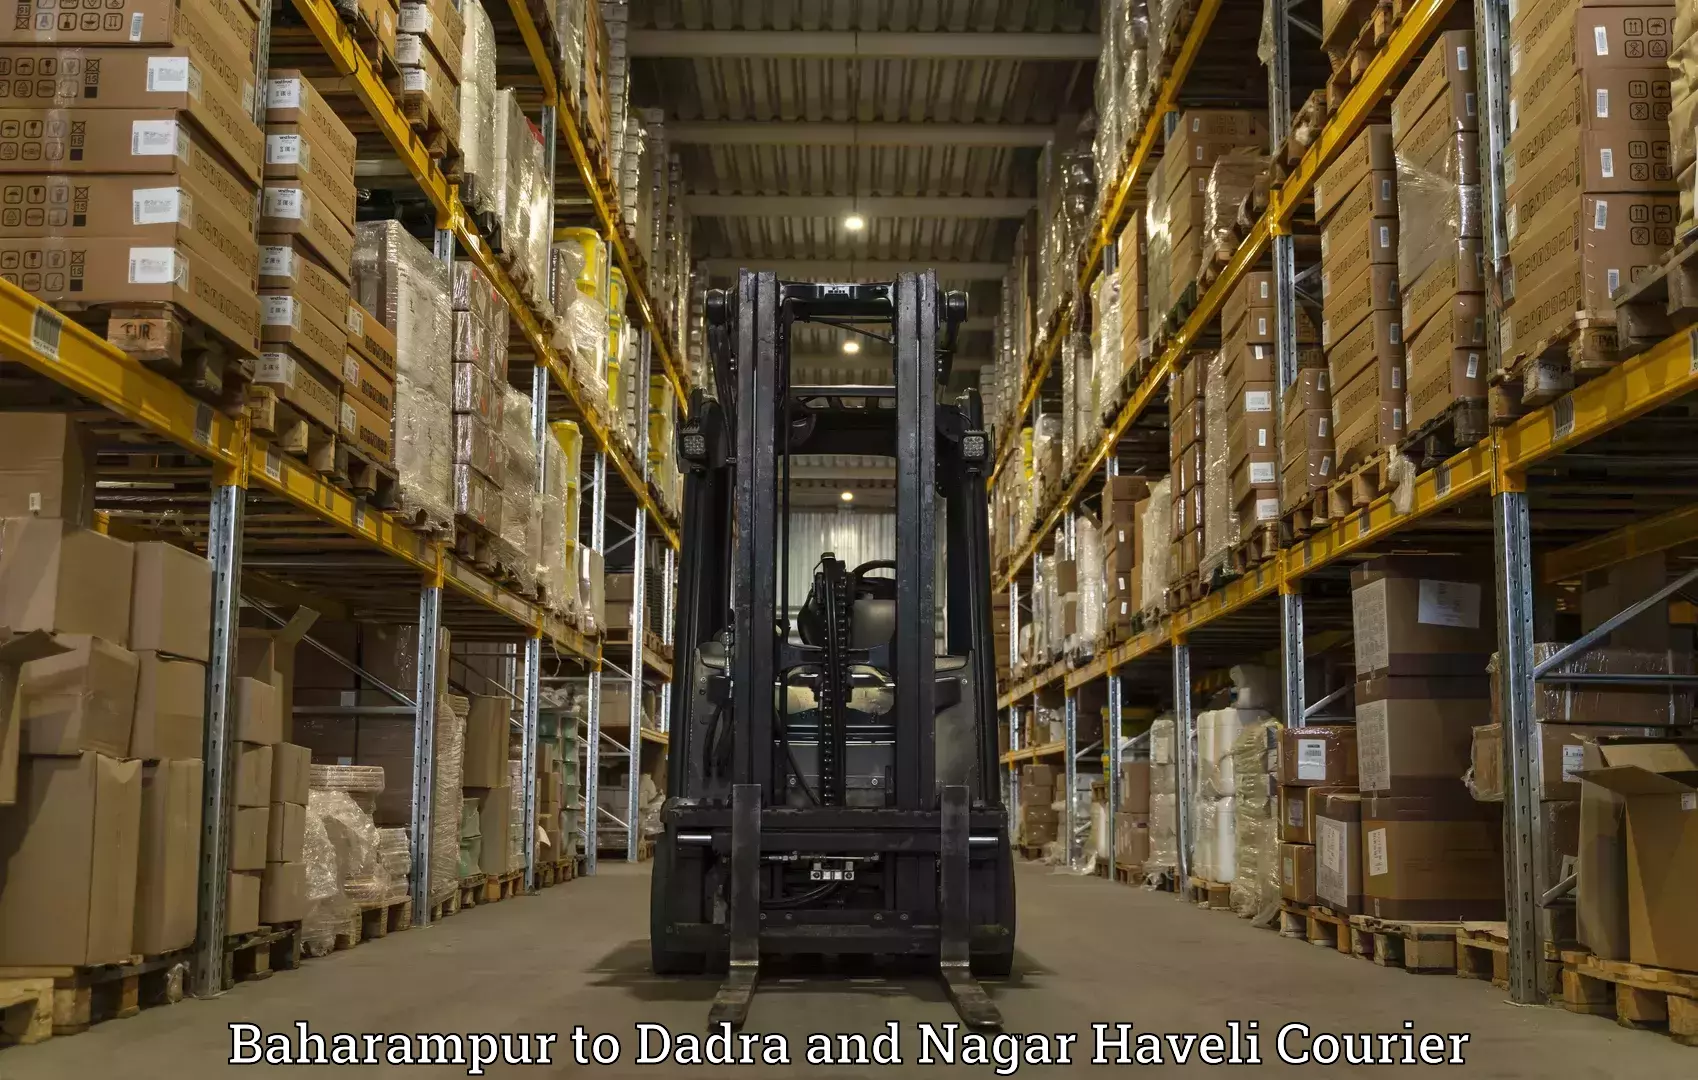 Express courier capabilities Baharampur to Dadra and Nagar Haveli